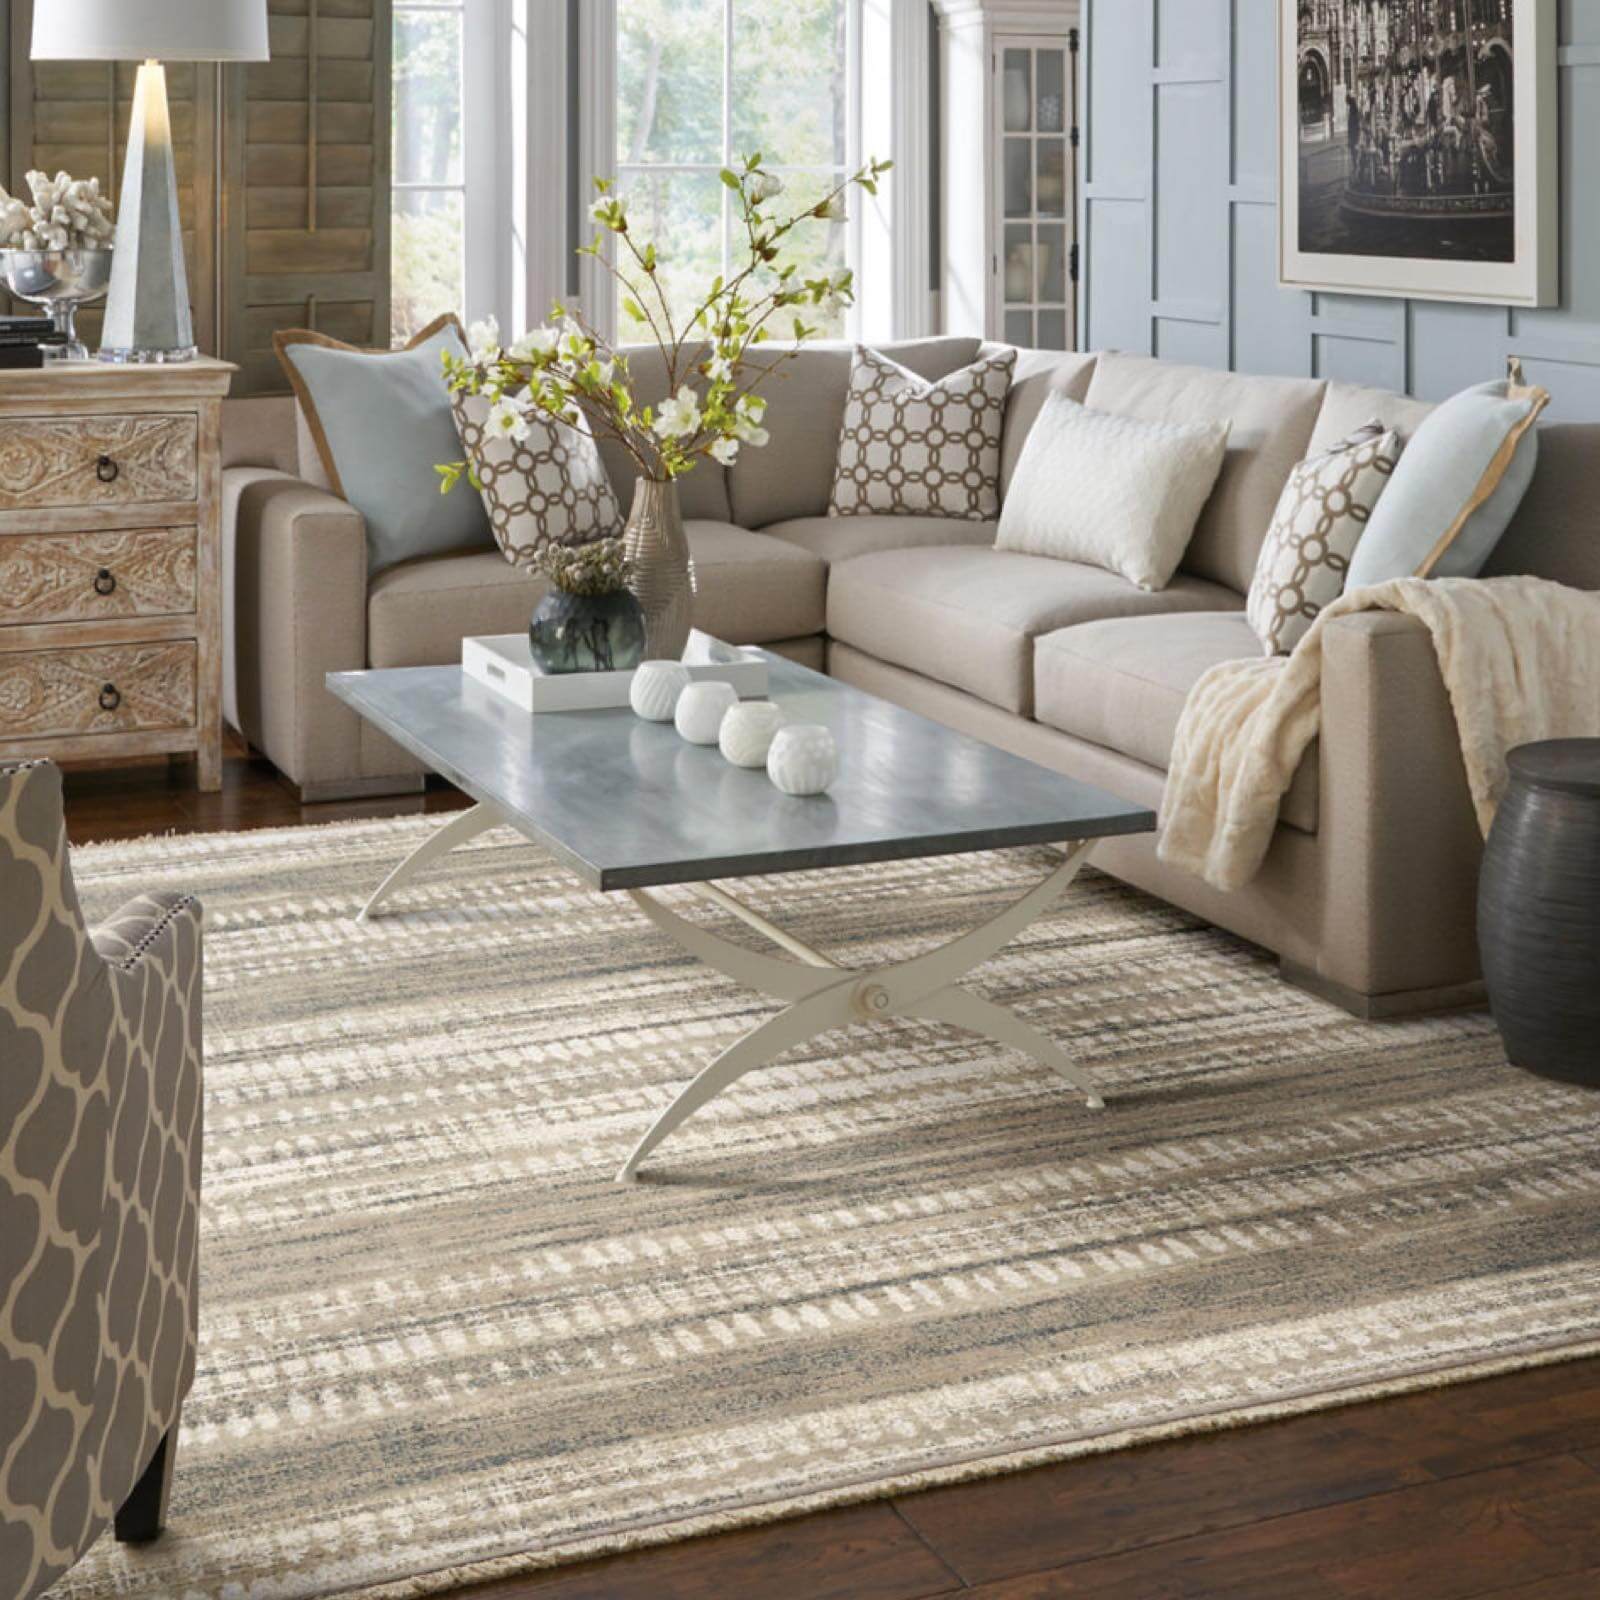 Living room rug | The Flooring Center